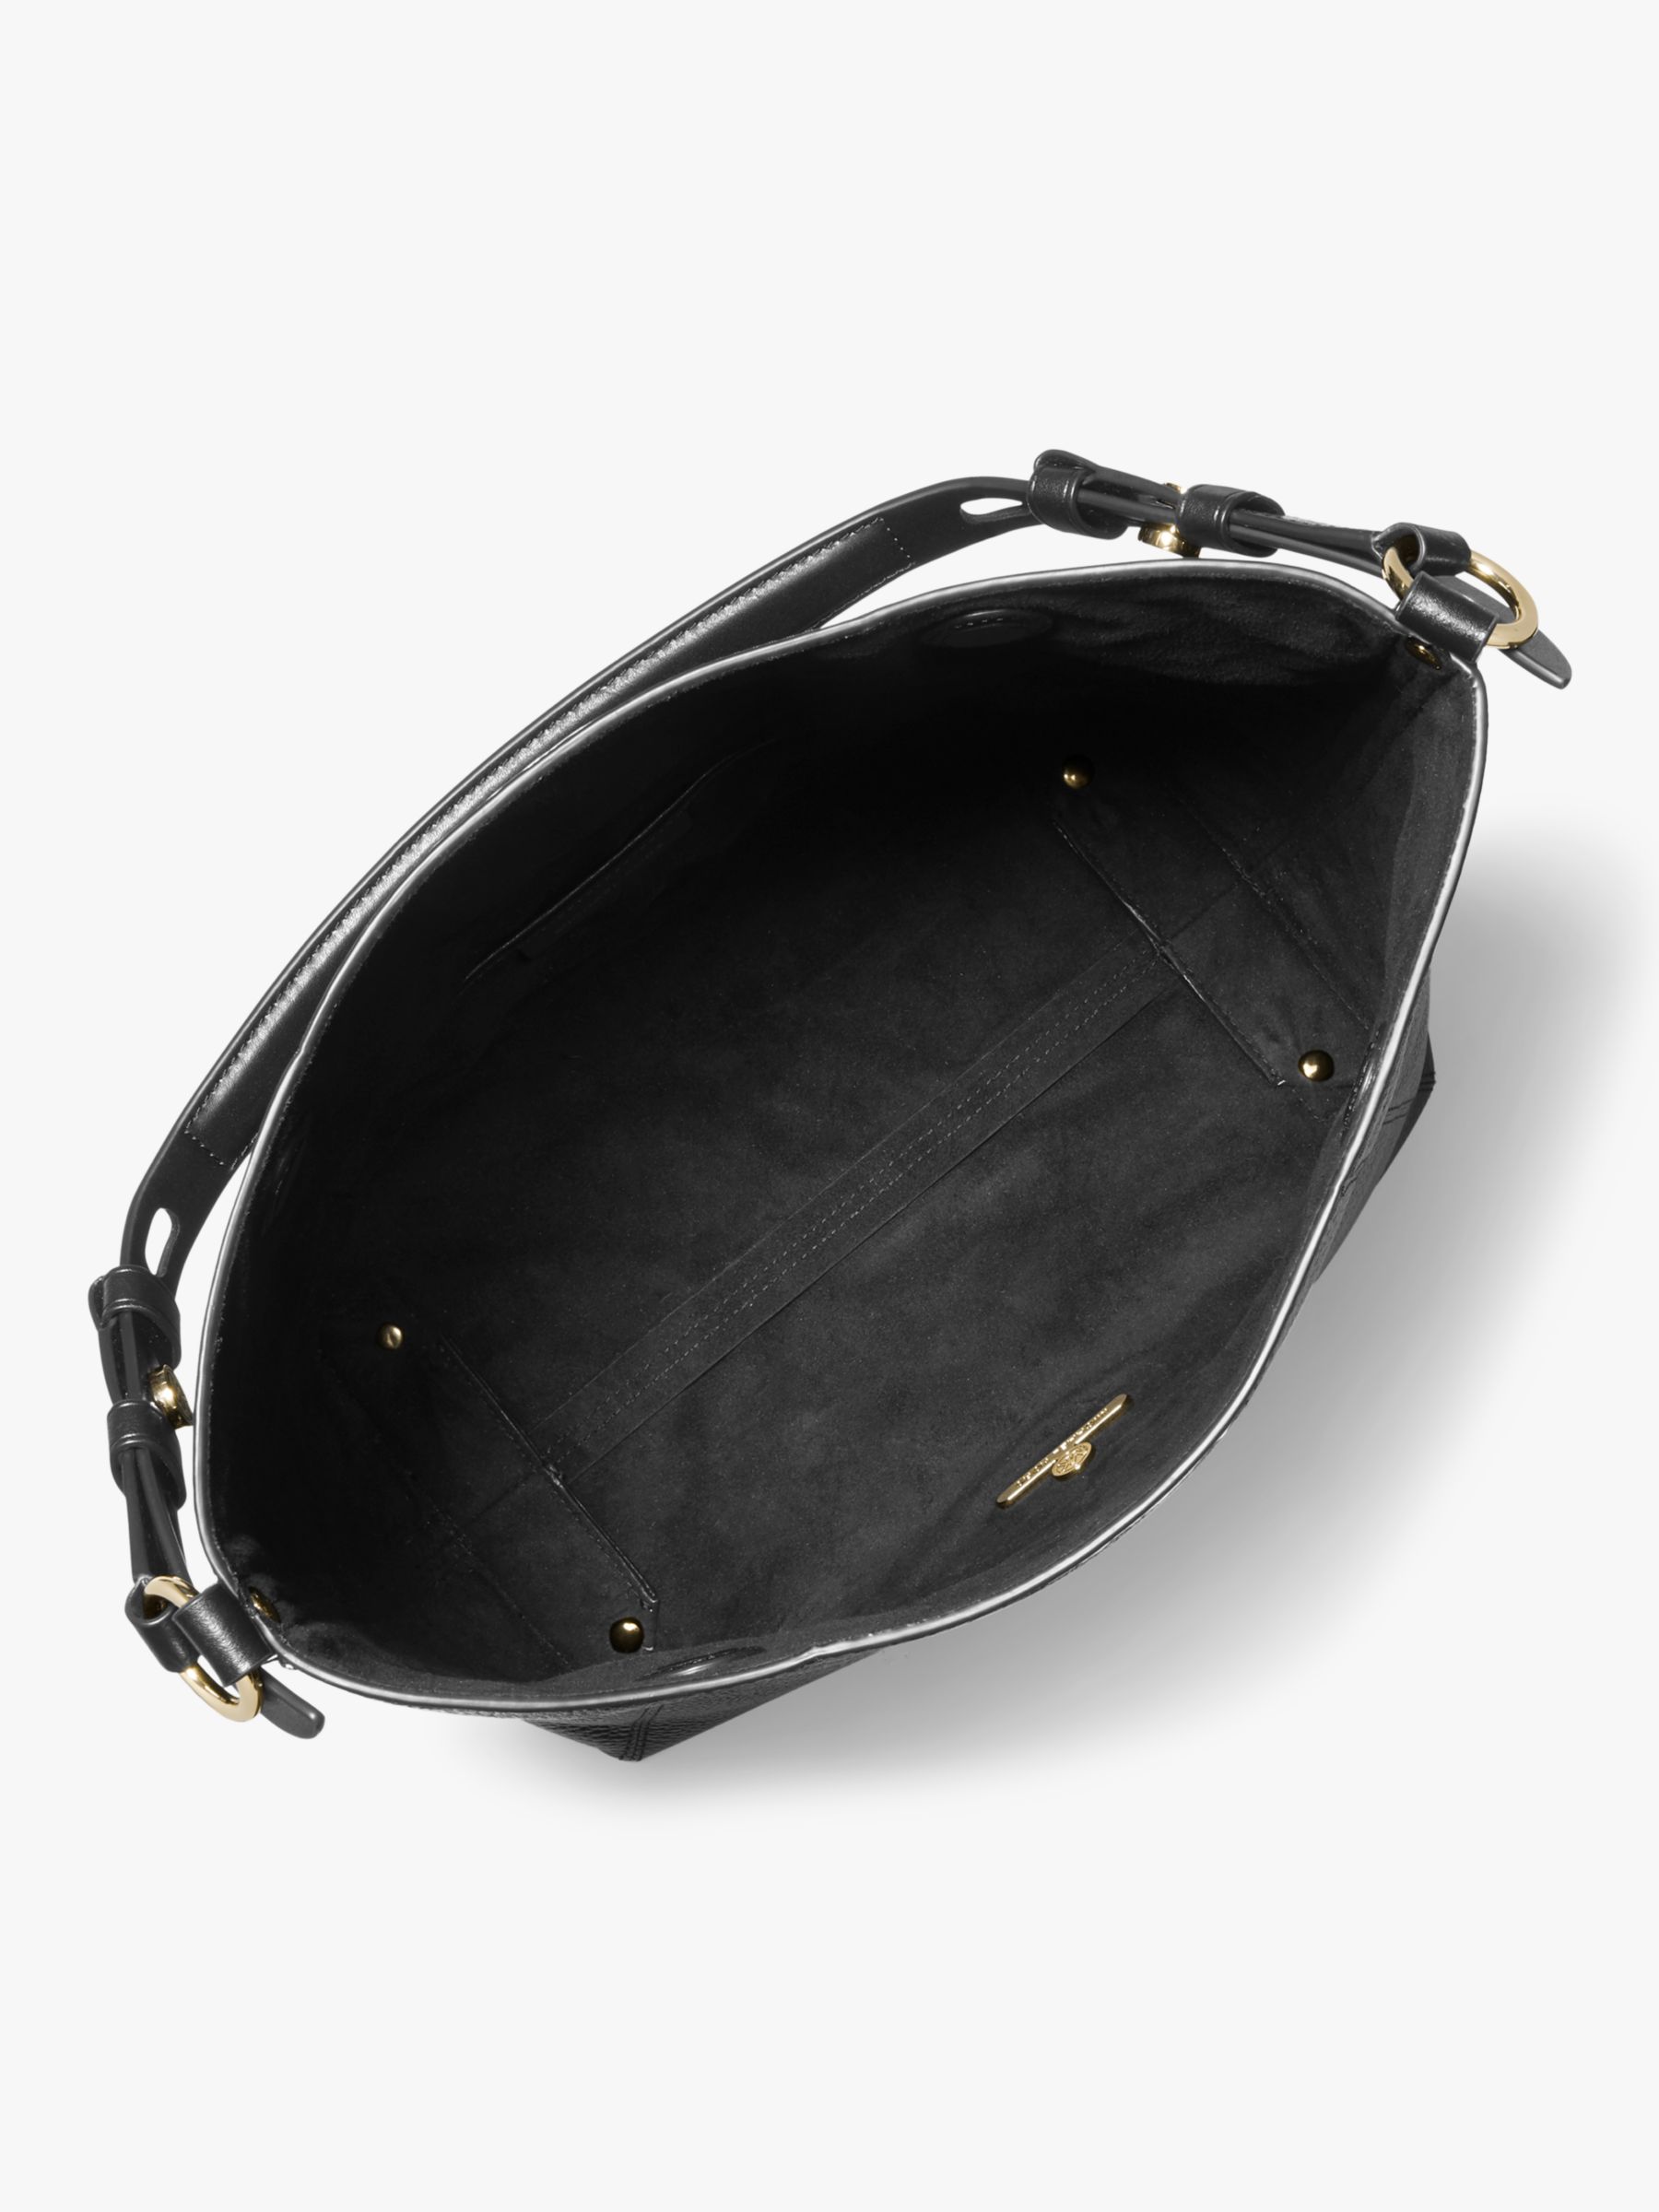 MICHAEL Michael Kors Lucy Large Leather Hobo Bag, Black at John Lewis & Partners